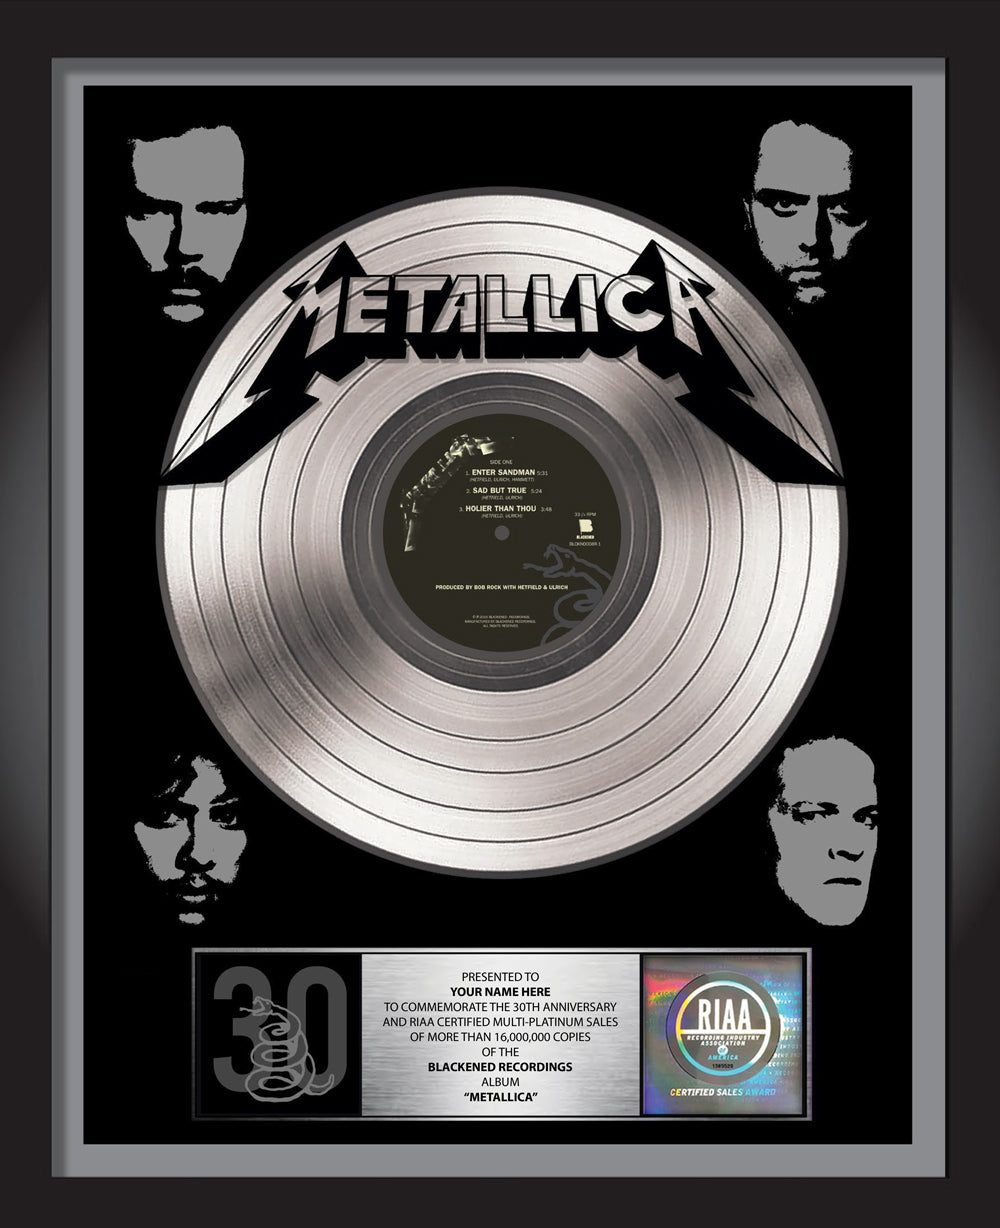 Metallica (The Black Album) – Port of Sound Records